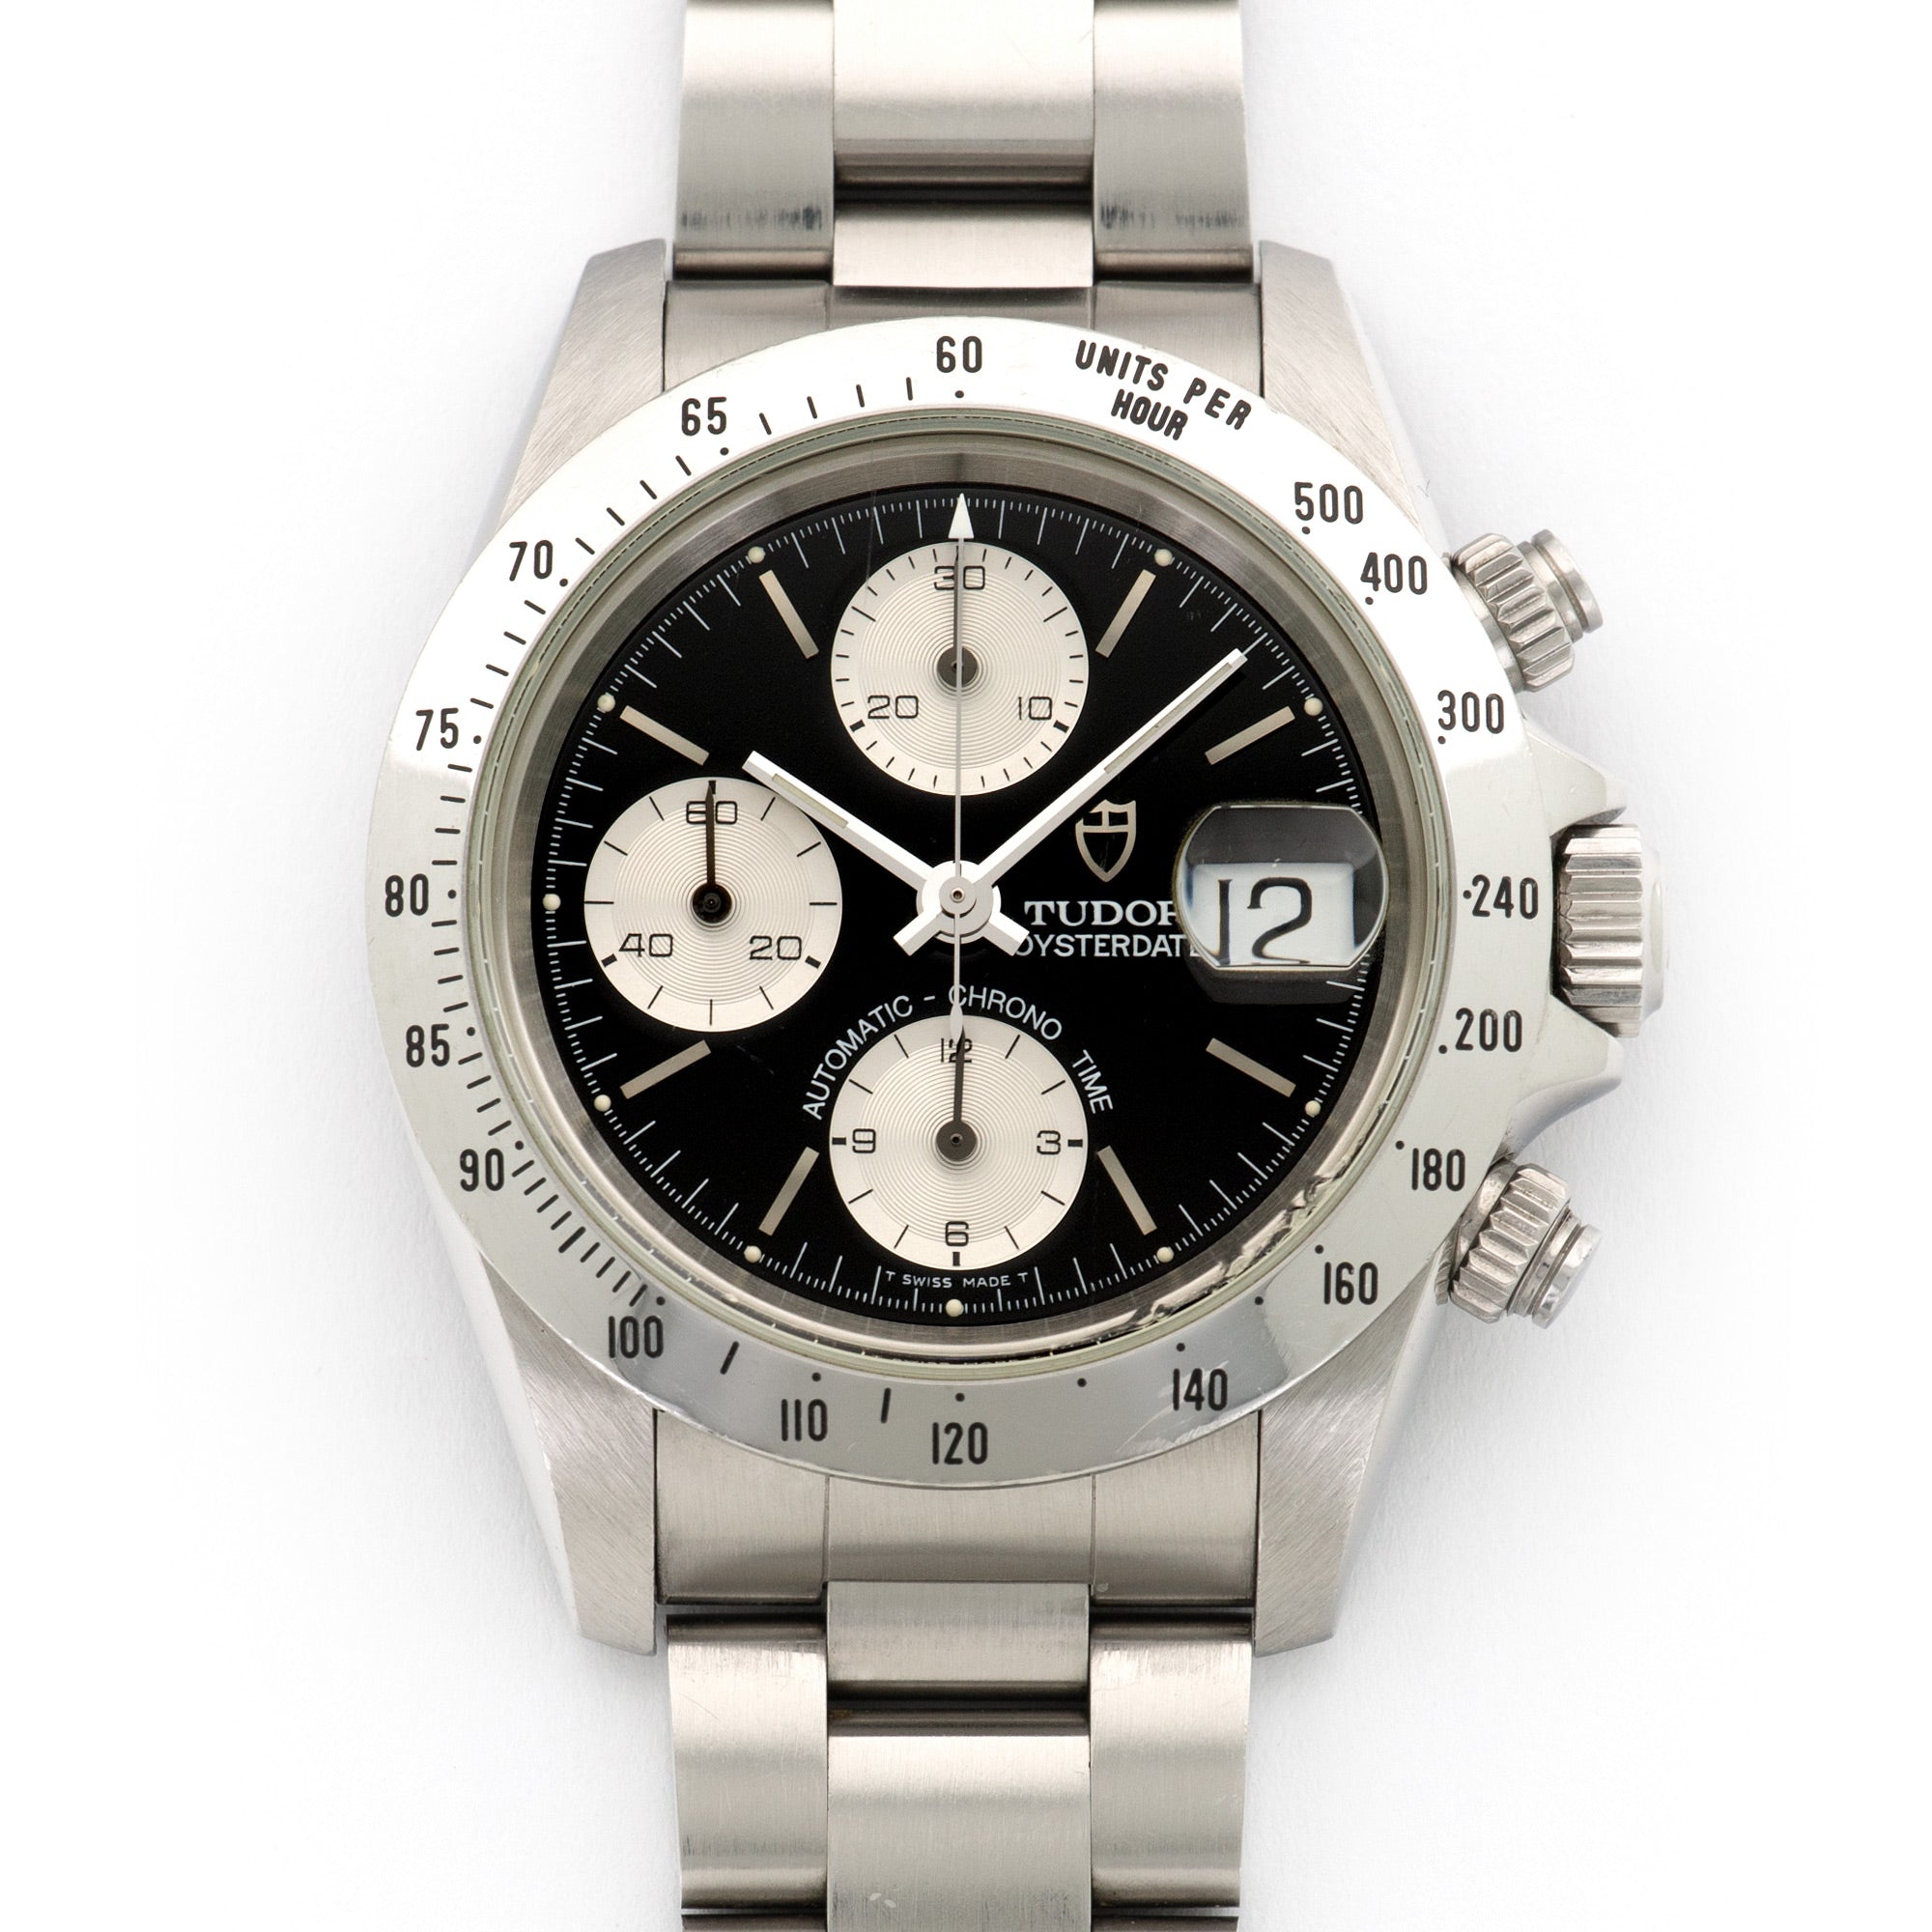 Tudor - Tudor Steel Chrono-Time Watch Ref. 79280 with Original Warranty Paper - The Keystone Watches